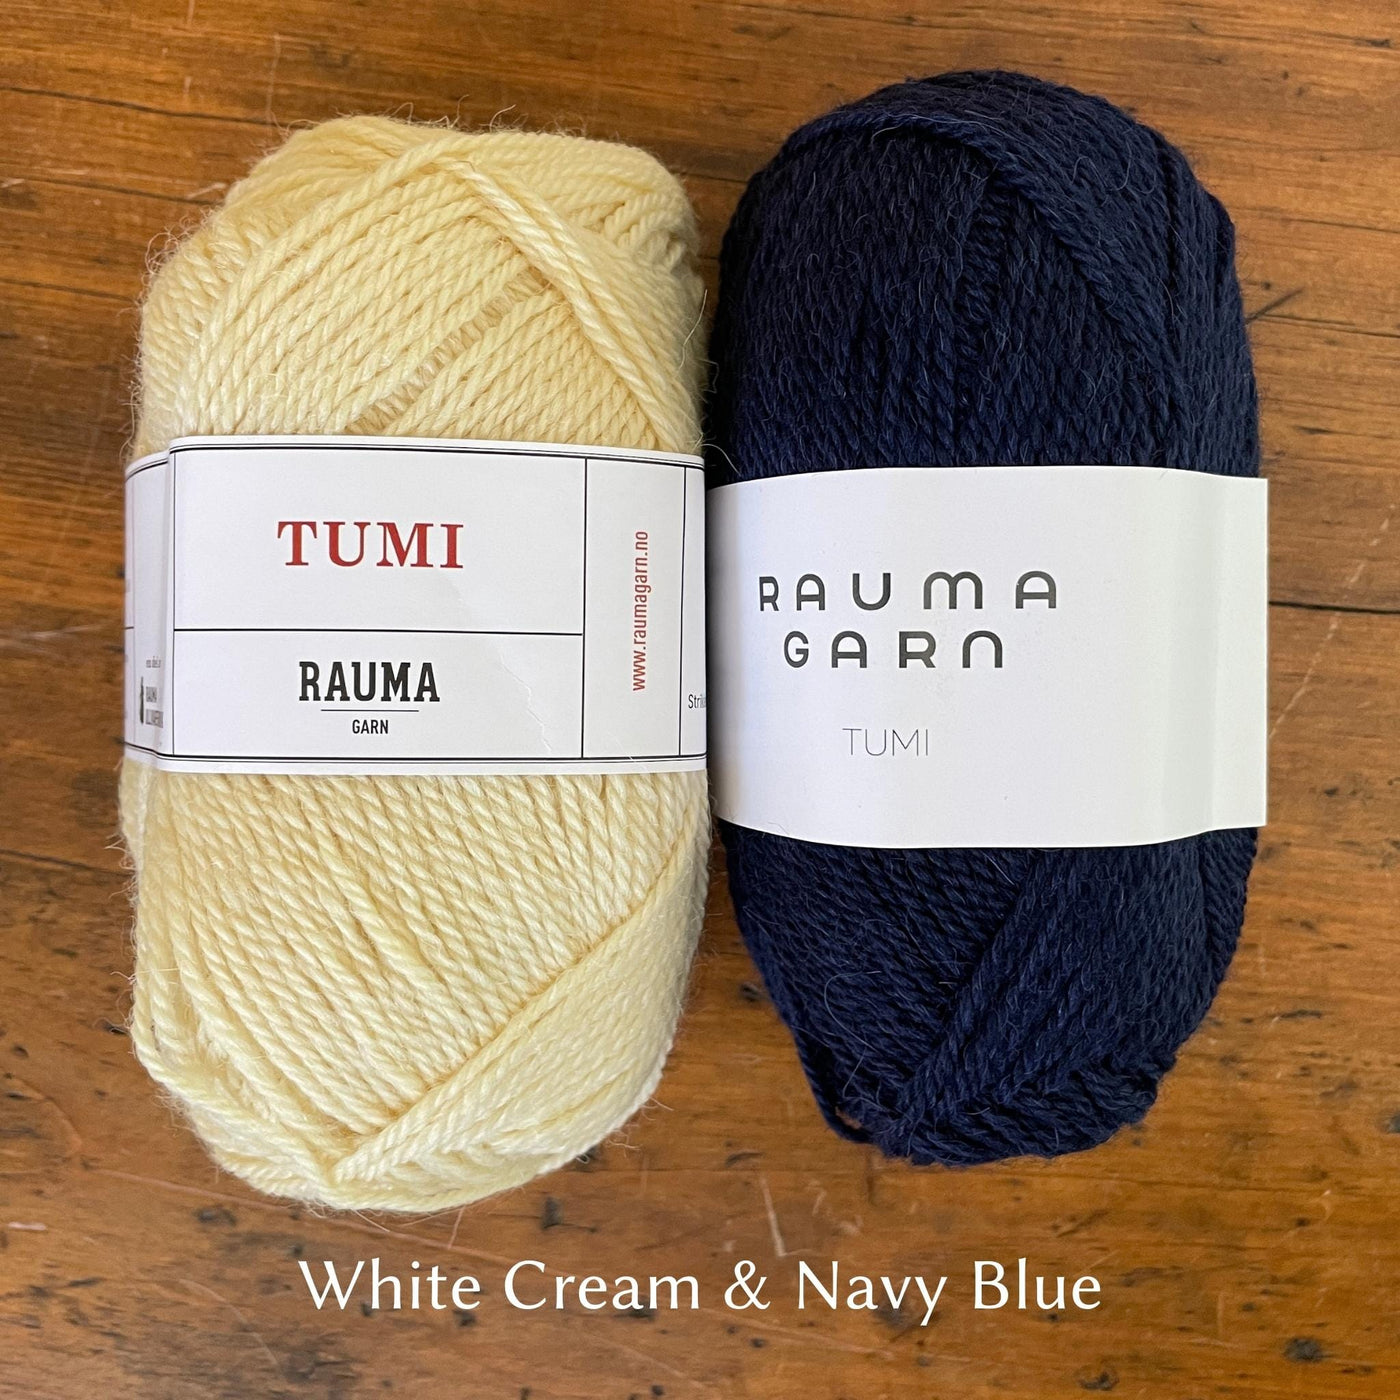 Rauma Tumi yarn; one cream ball and one navy blue ball of yarn.